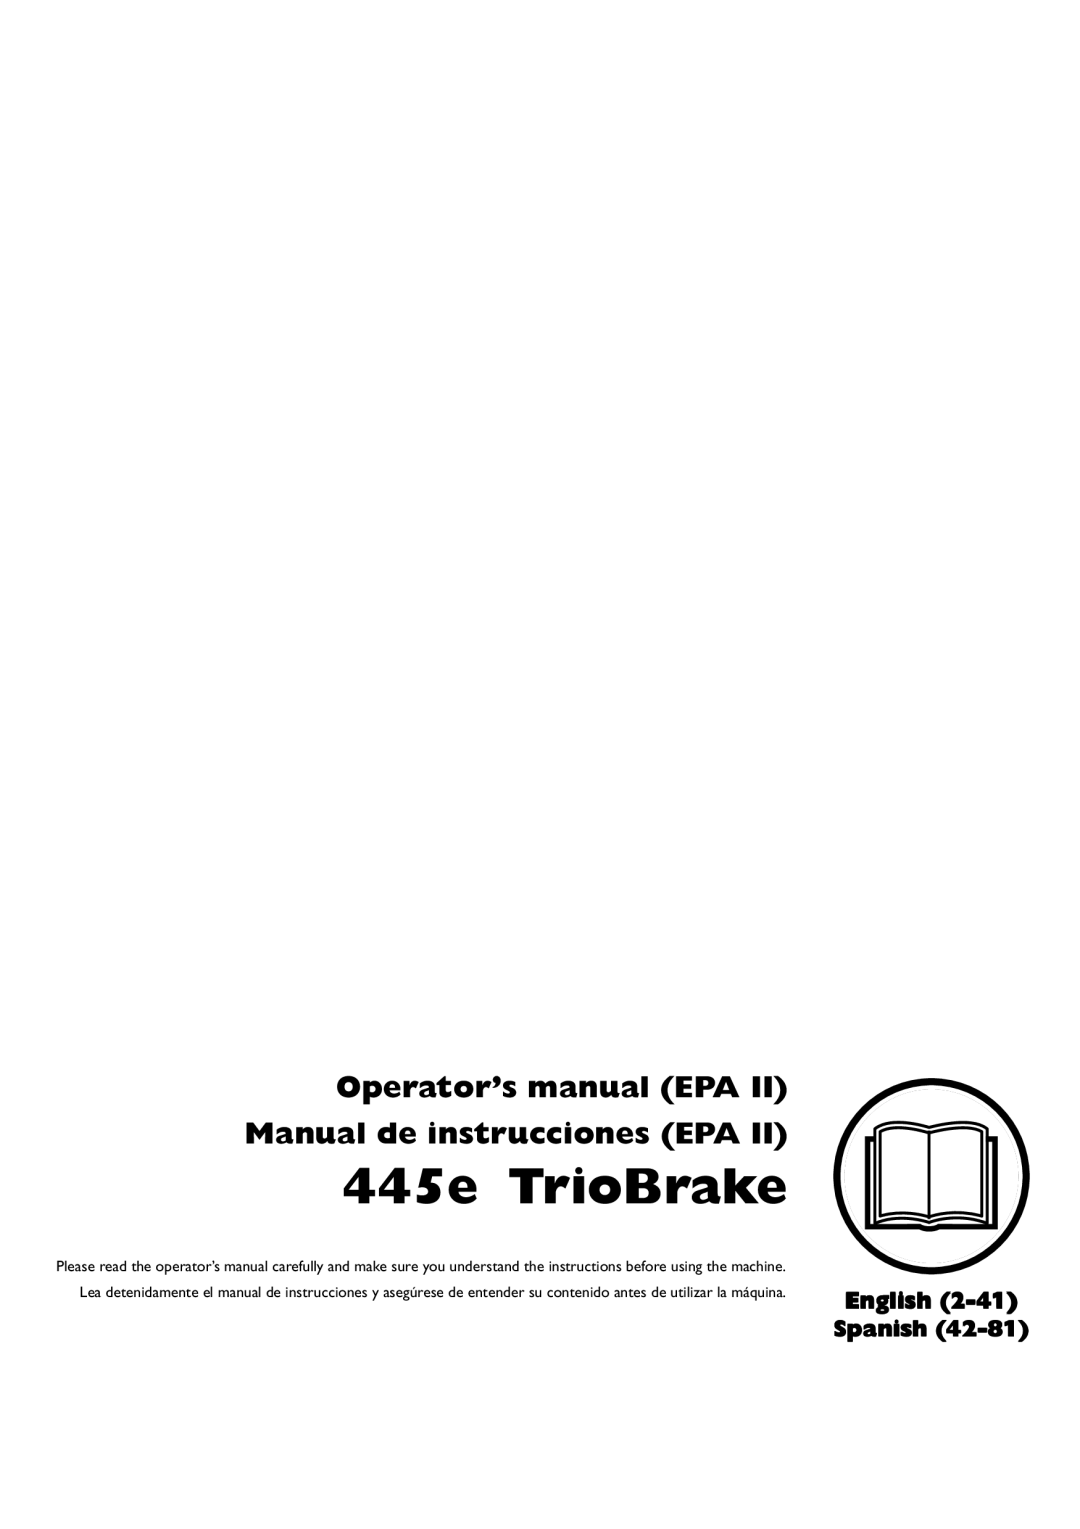 Husqvarna 445e TrioBrake manual Operator’s manual EPA Manual de instrucciones EPA, English, Spanish 